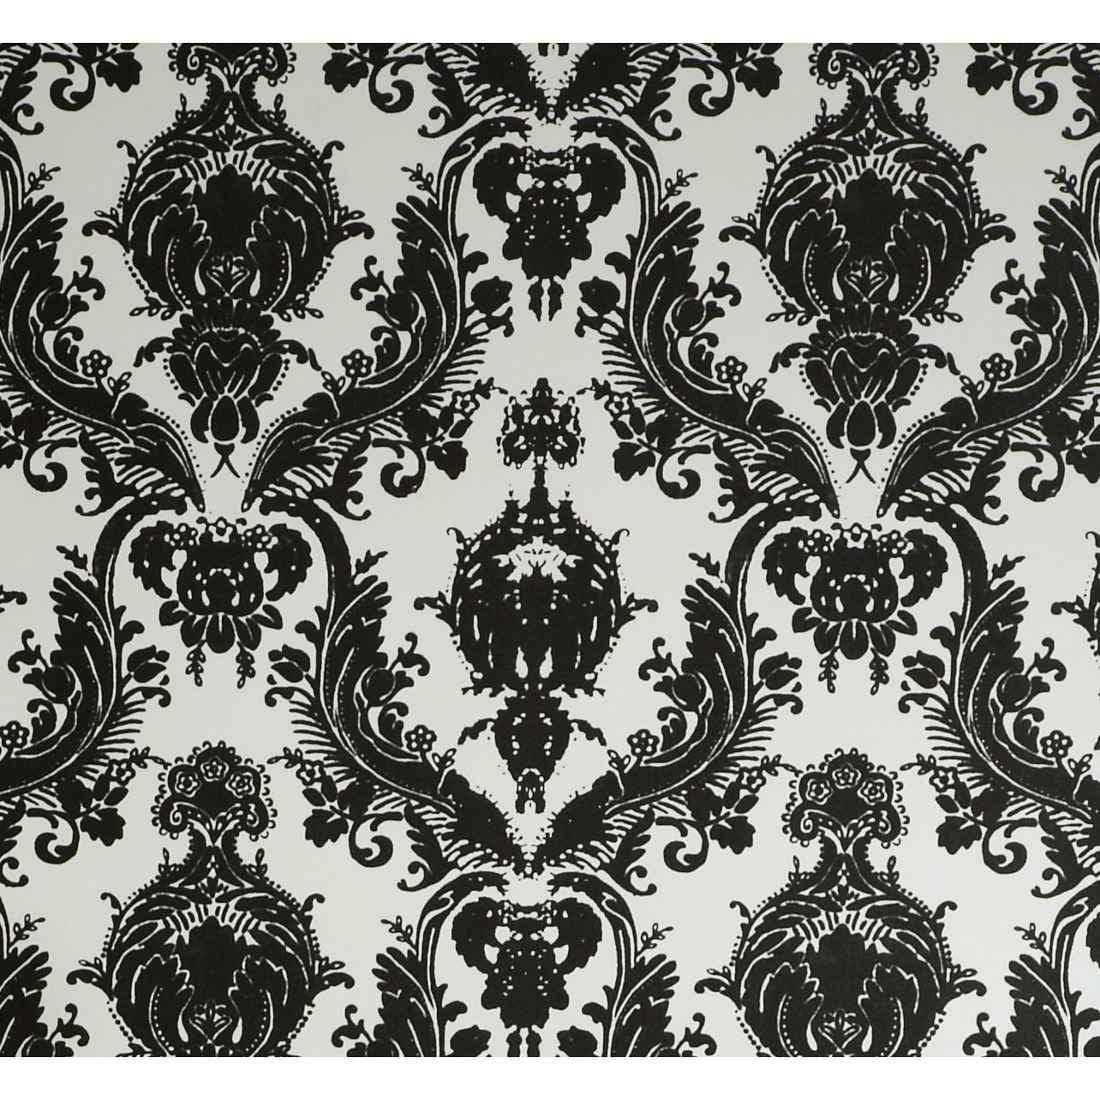 Designs Damsel Self Adhesive Black And White Temporary Wallpaper